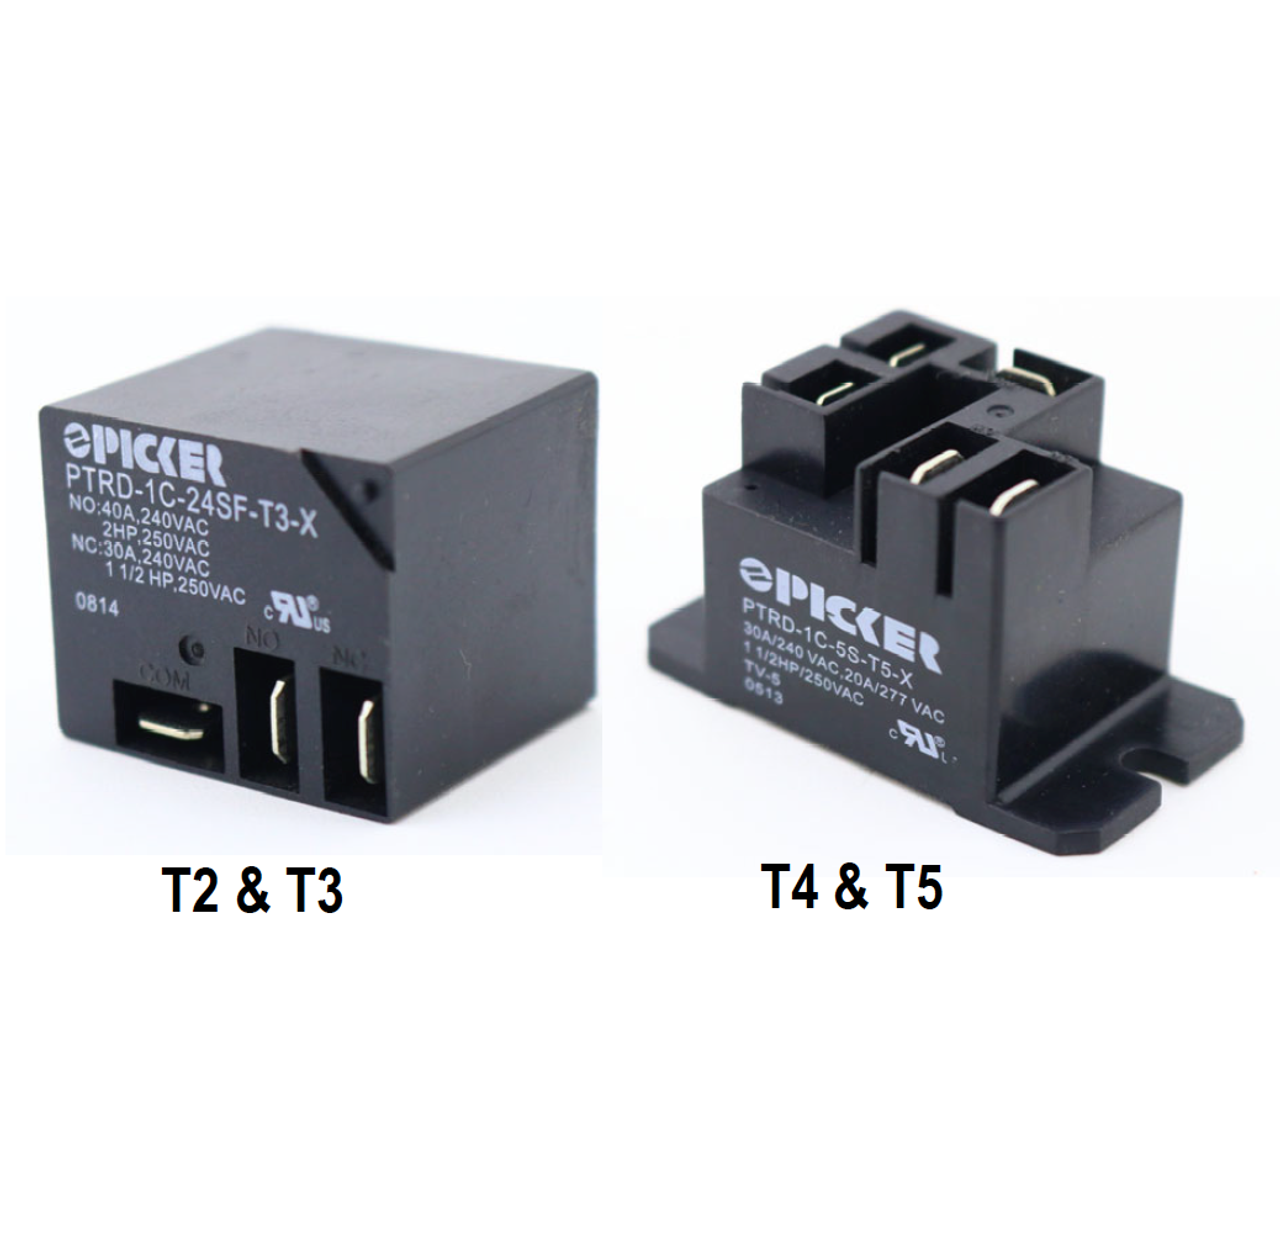 Picker PTRD-1A-9ST-T4-X-A0.6G Power Relays